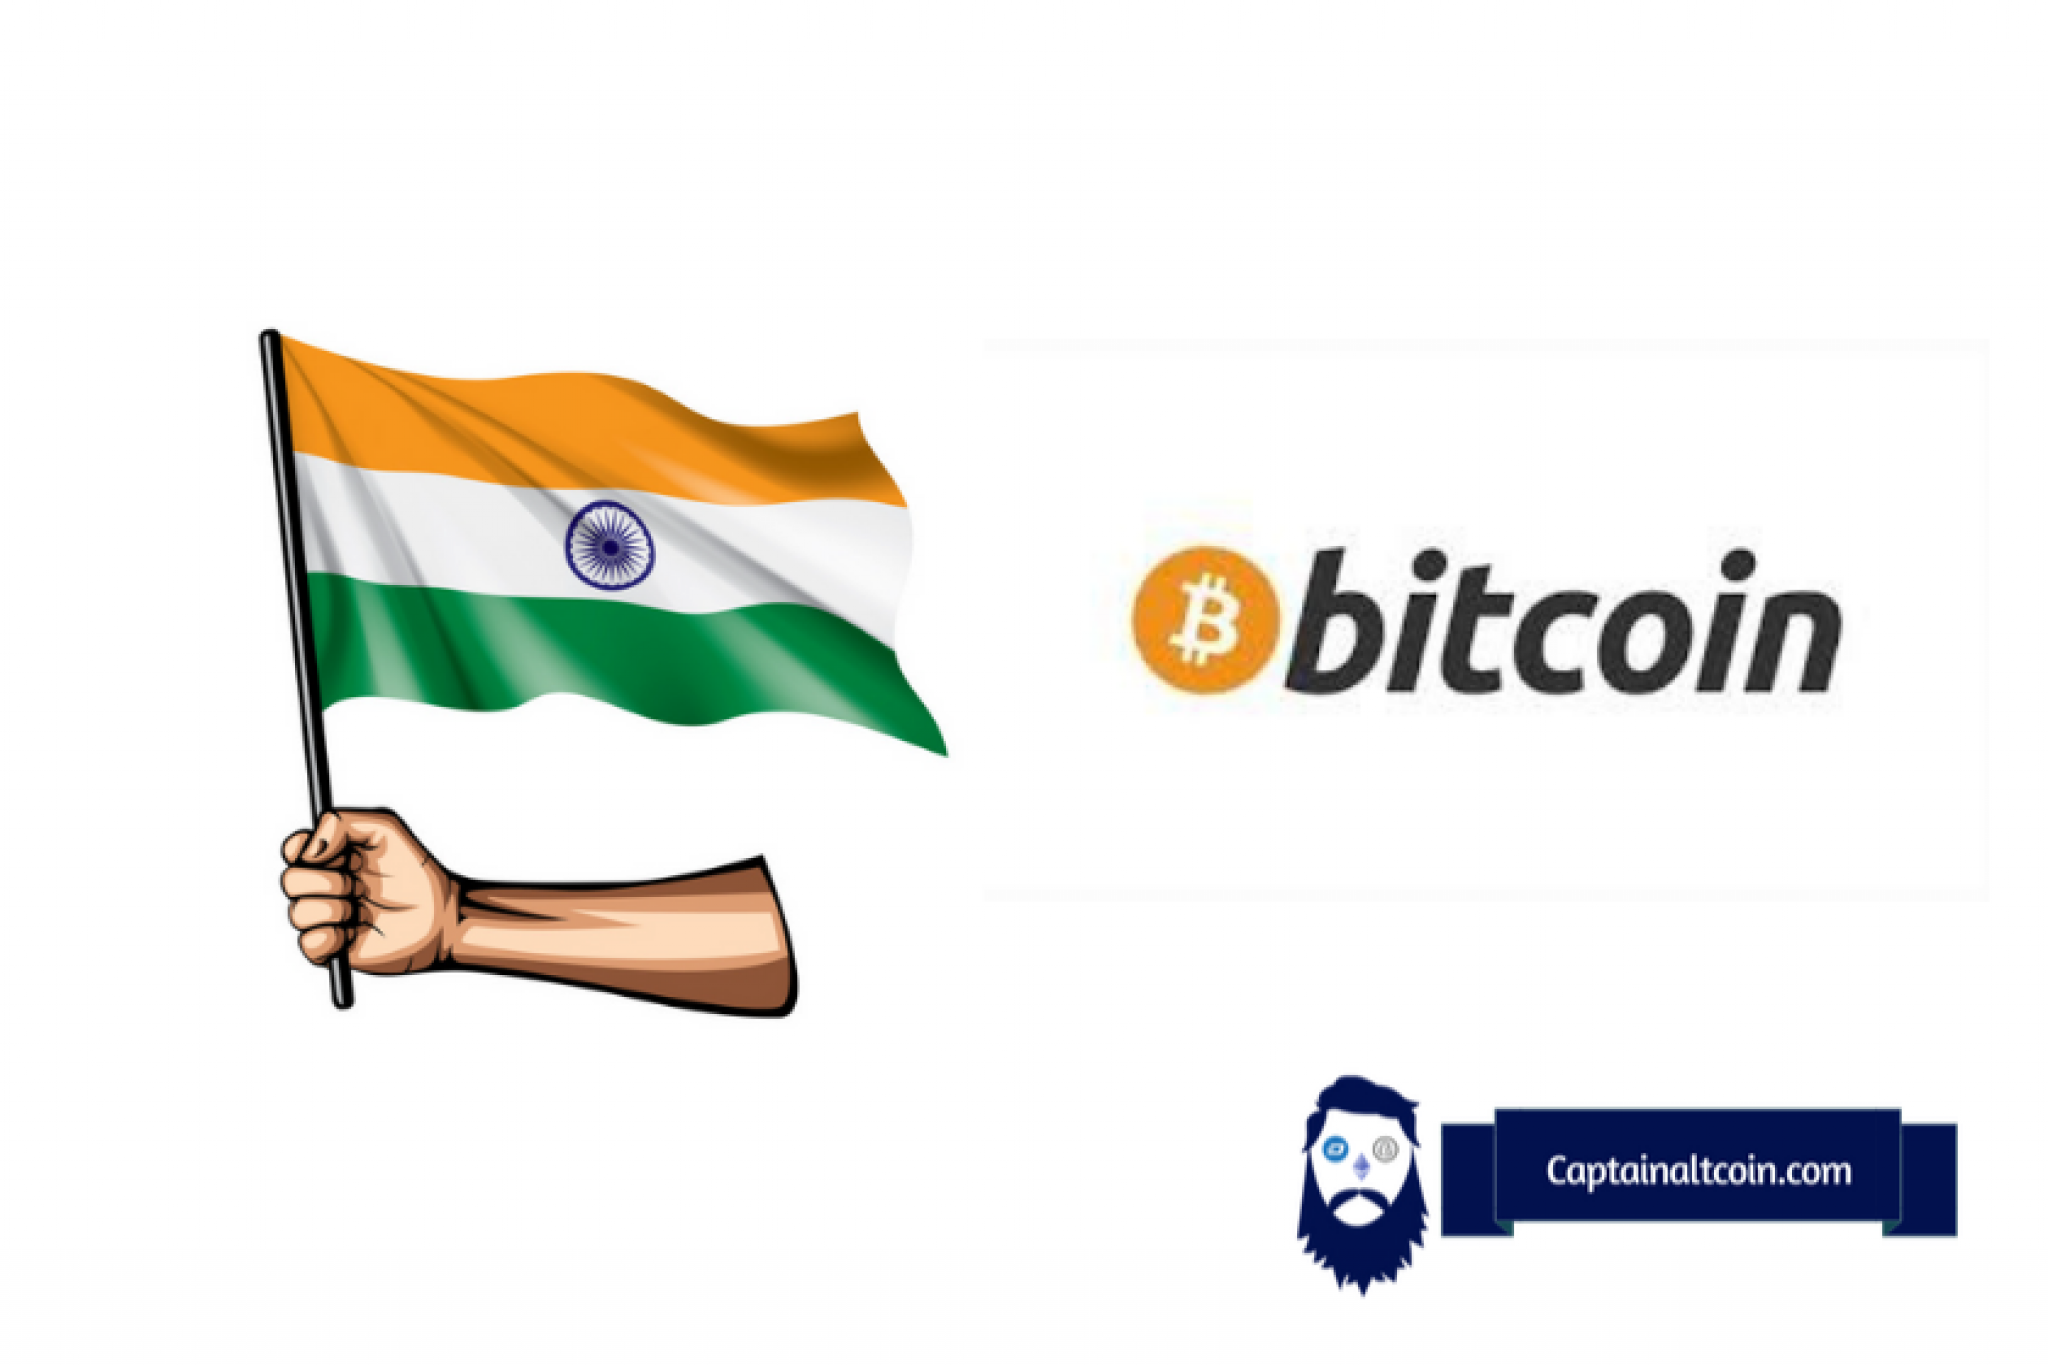 buy crypto in india